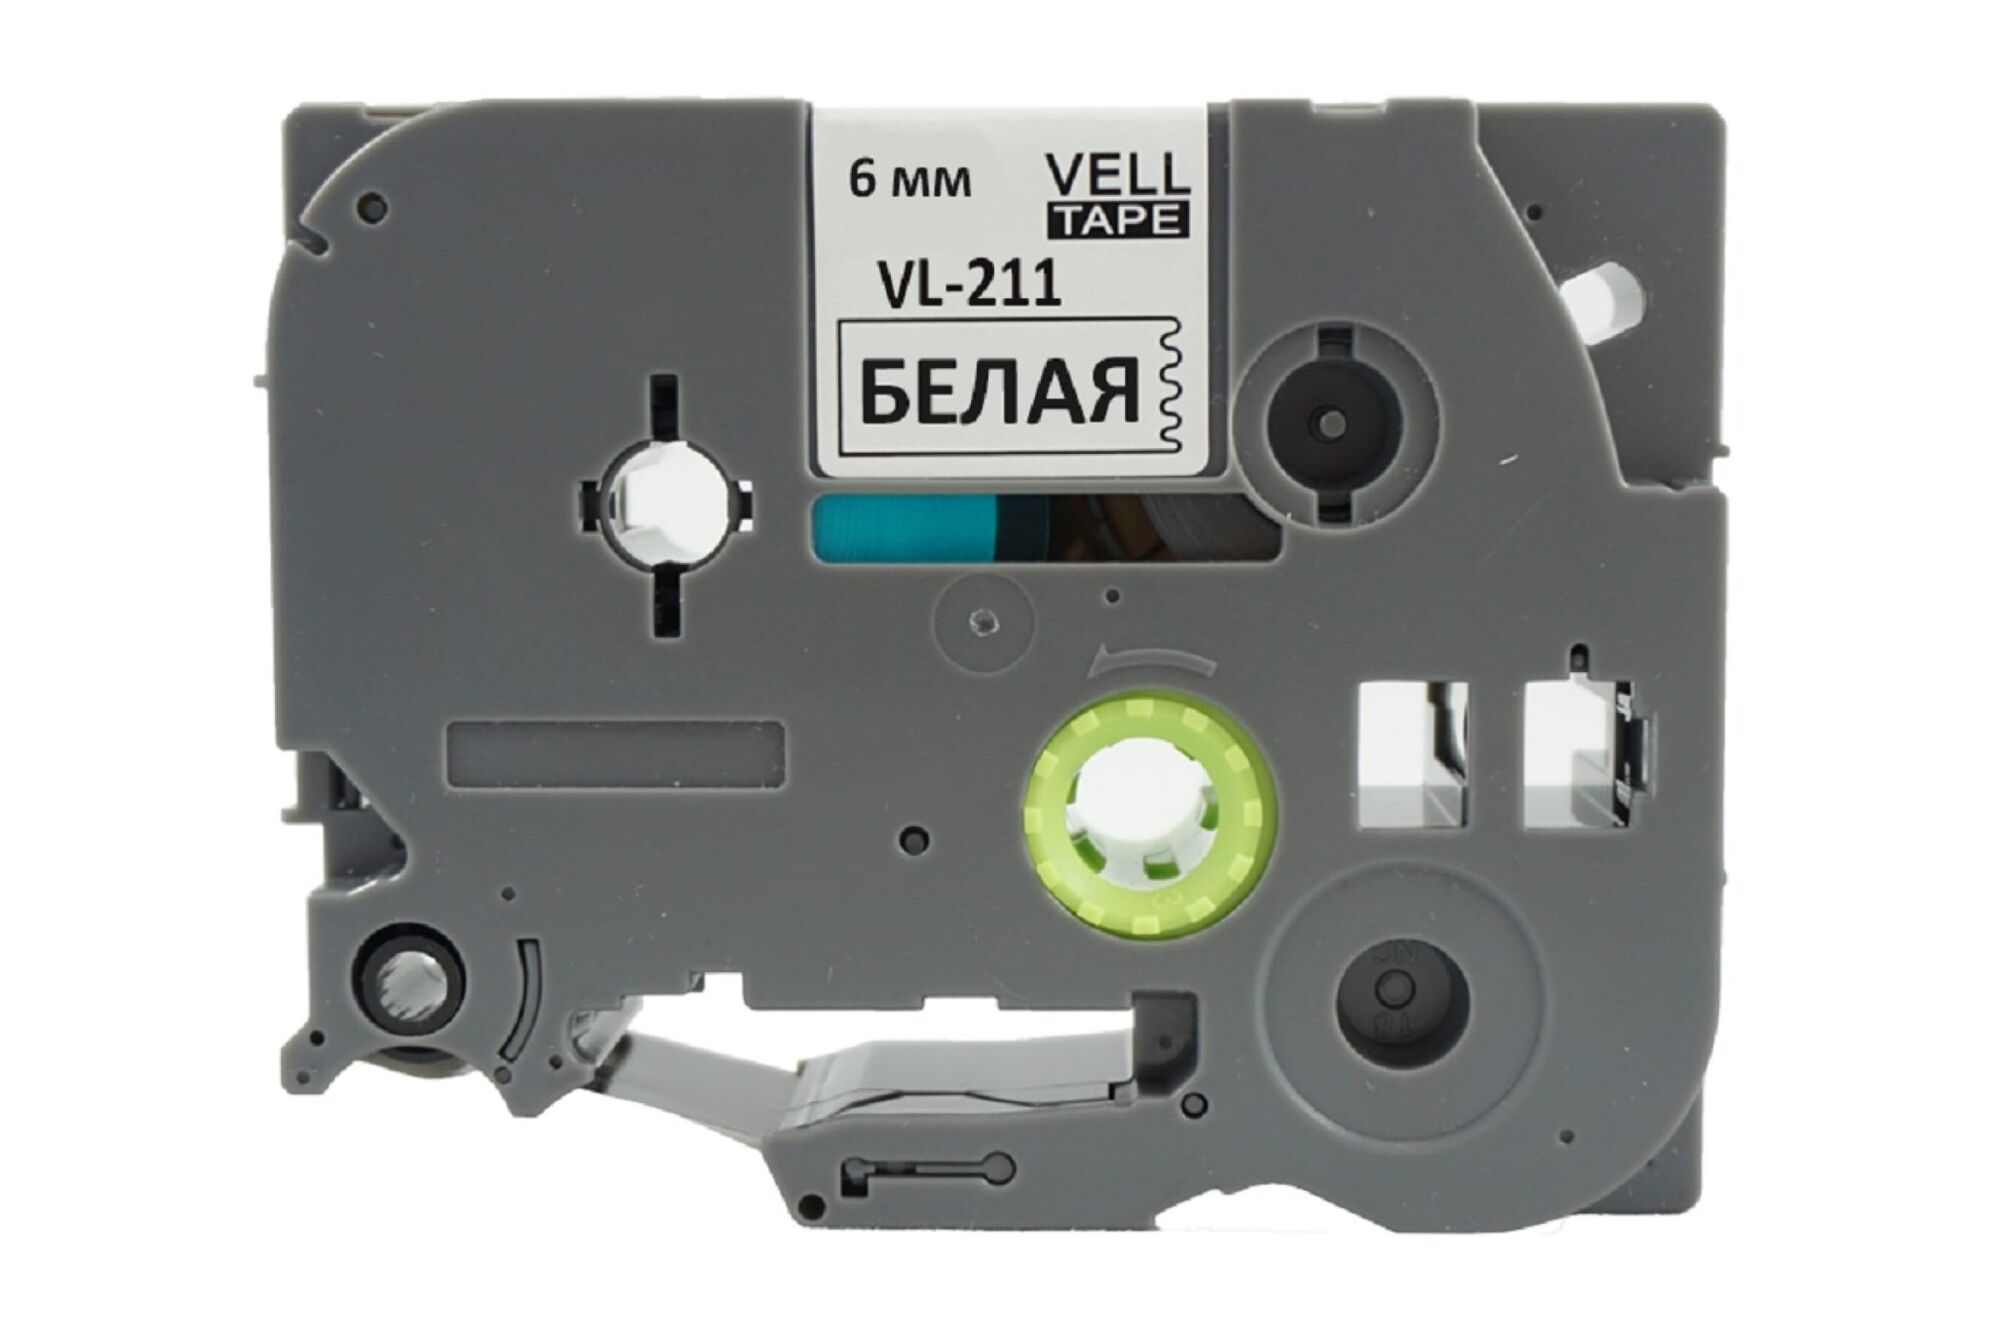 Лента Vell VL-211 6 мм, черный на белом для PT 1010/1280/D200/H105/E100/ D600/E300/2700/ P700/E550/9700, 211